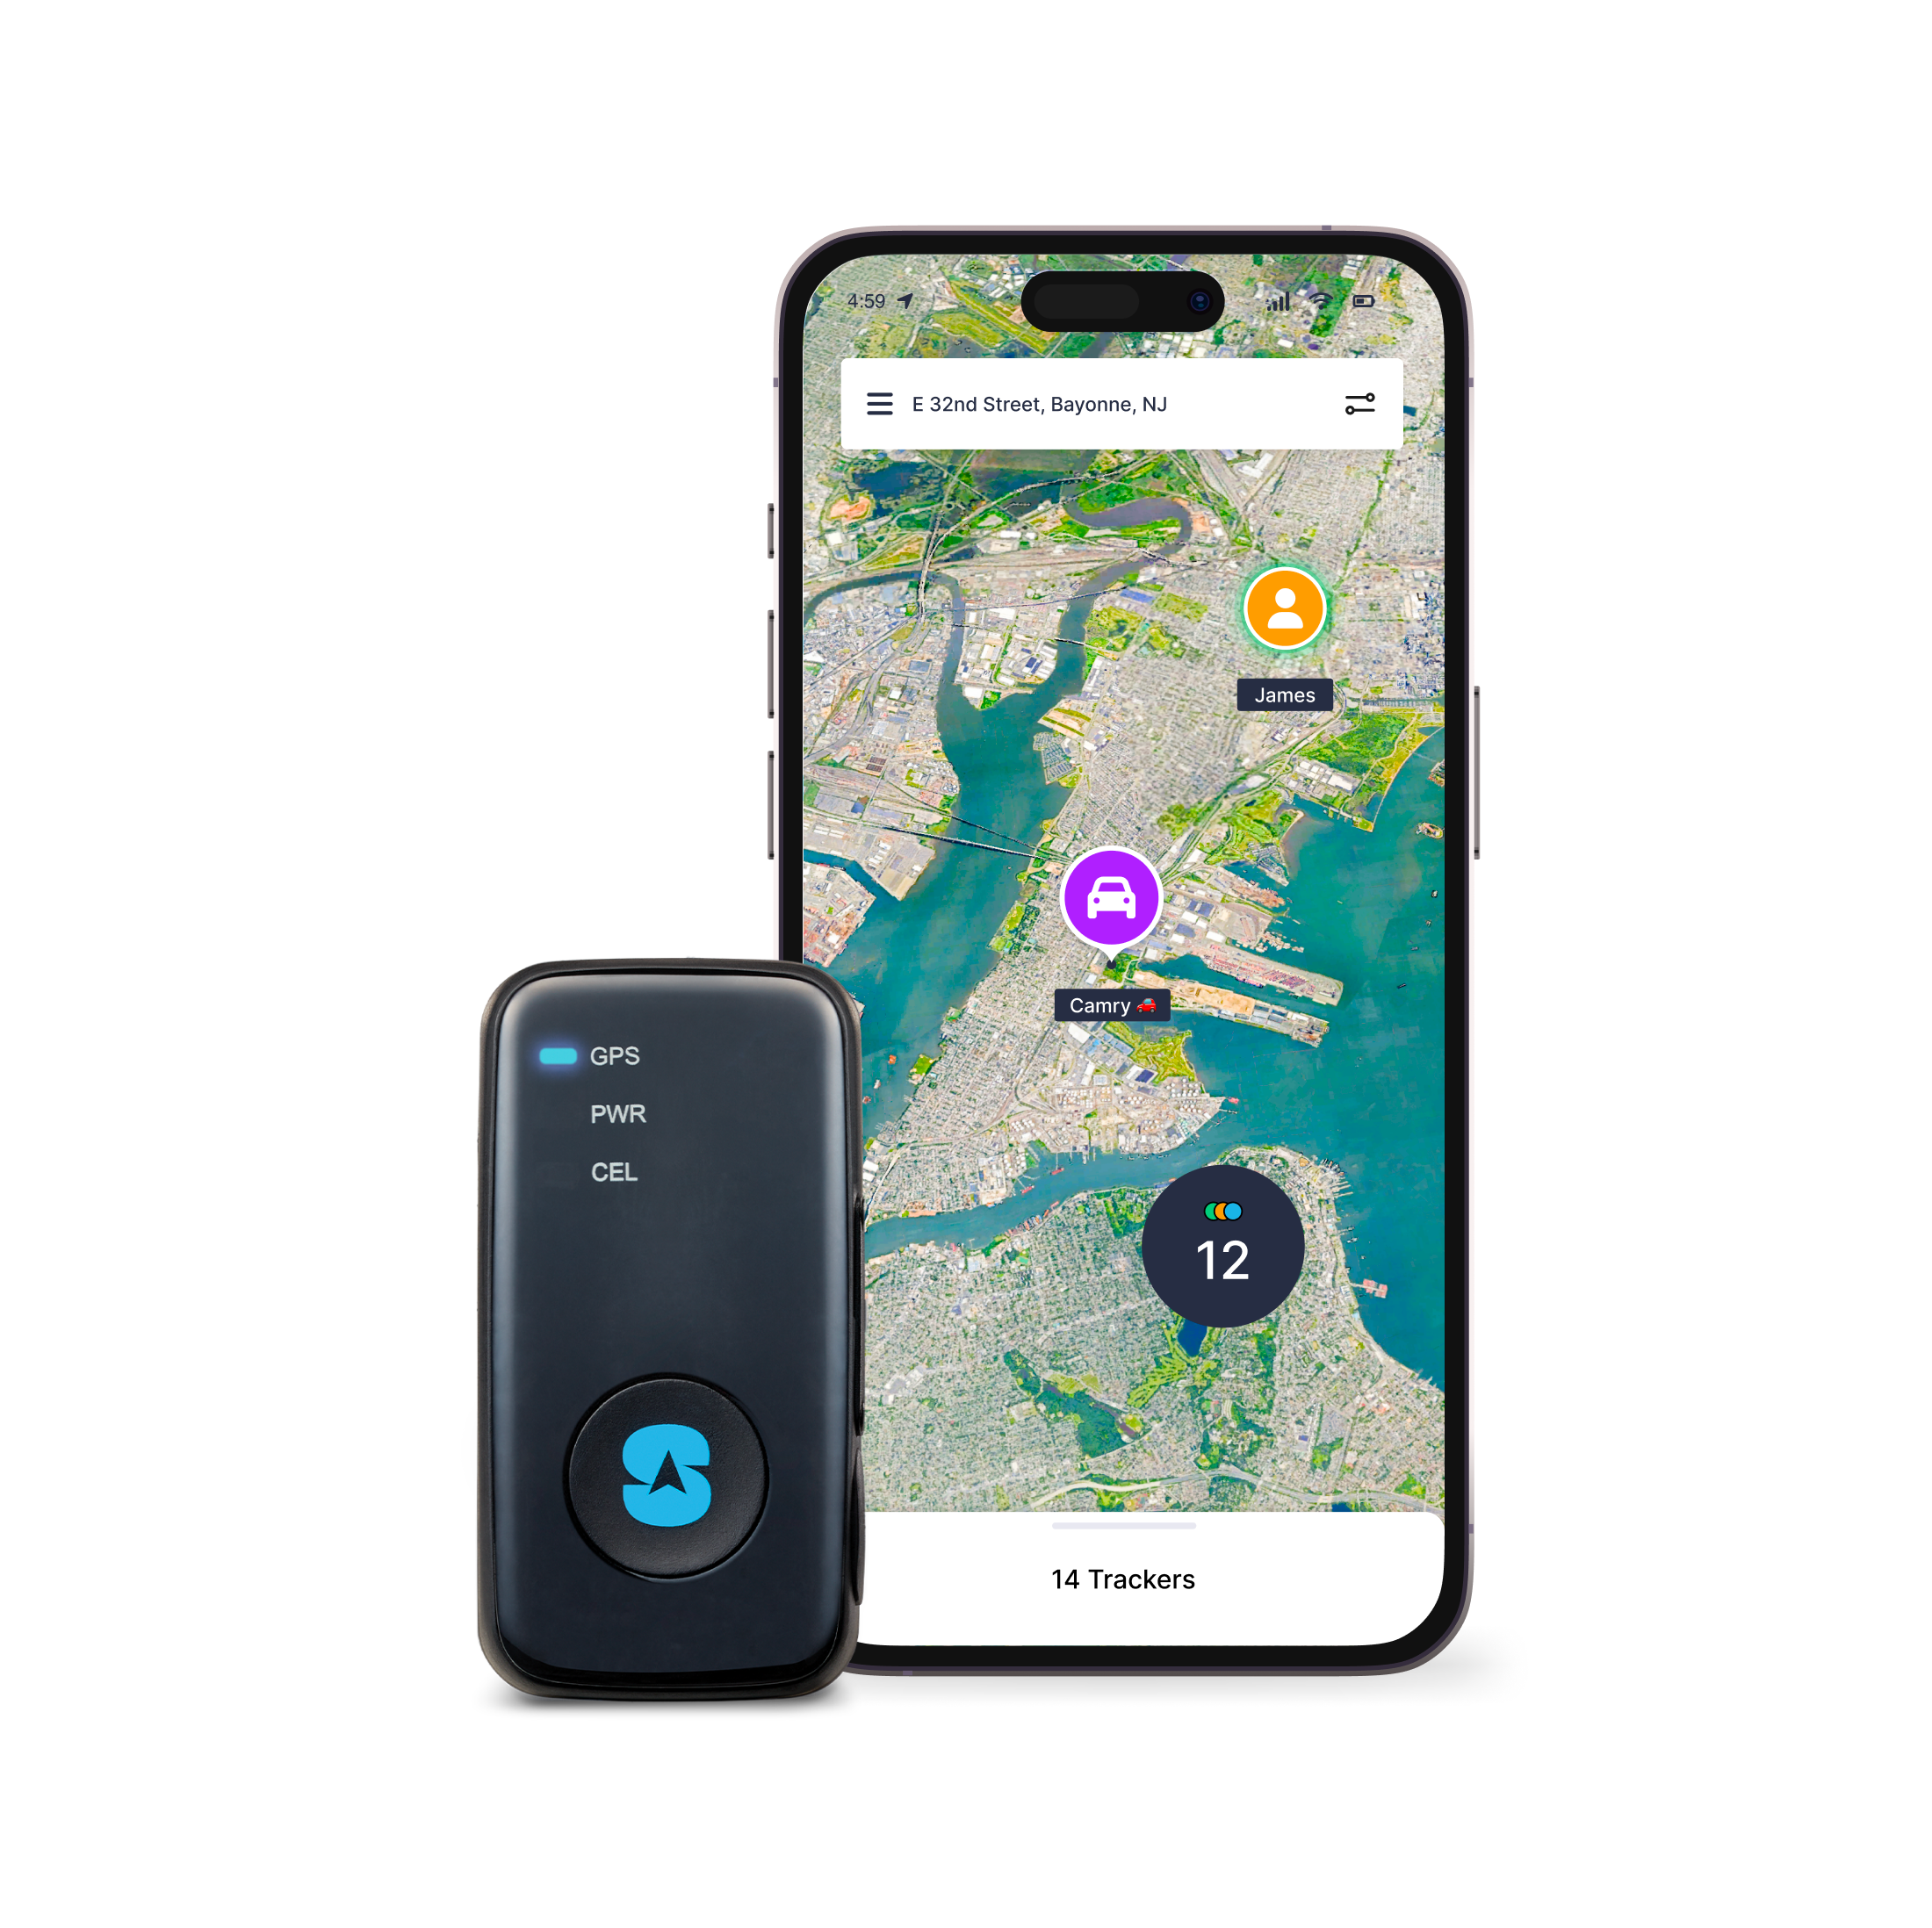 Free GL300 Real Time Mini GPS Tracker w/ 3 Month Plan